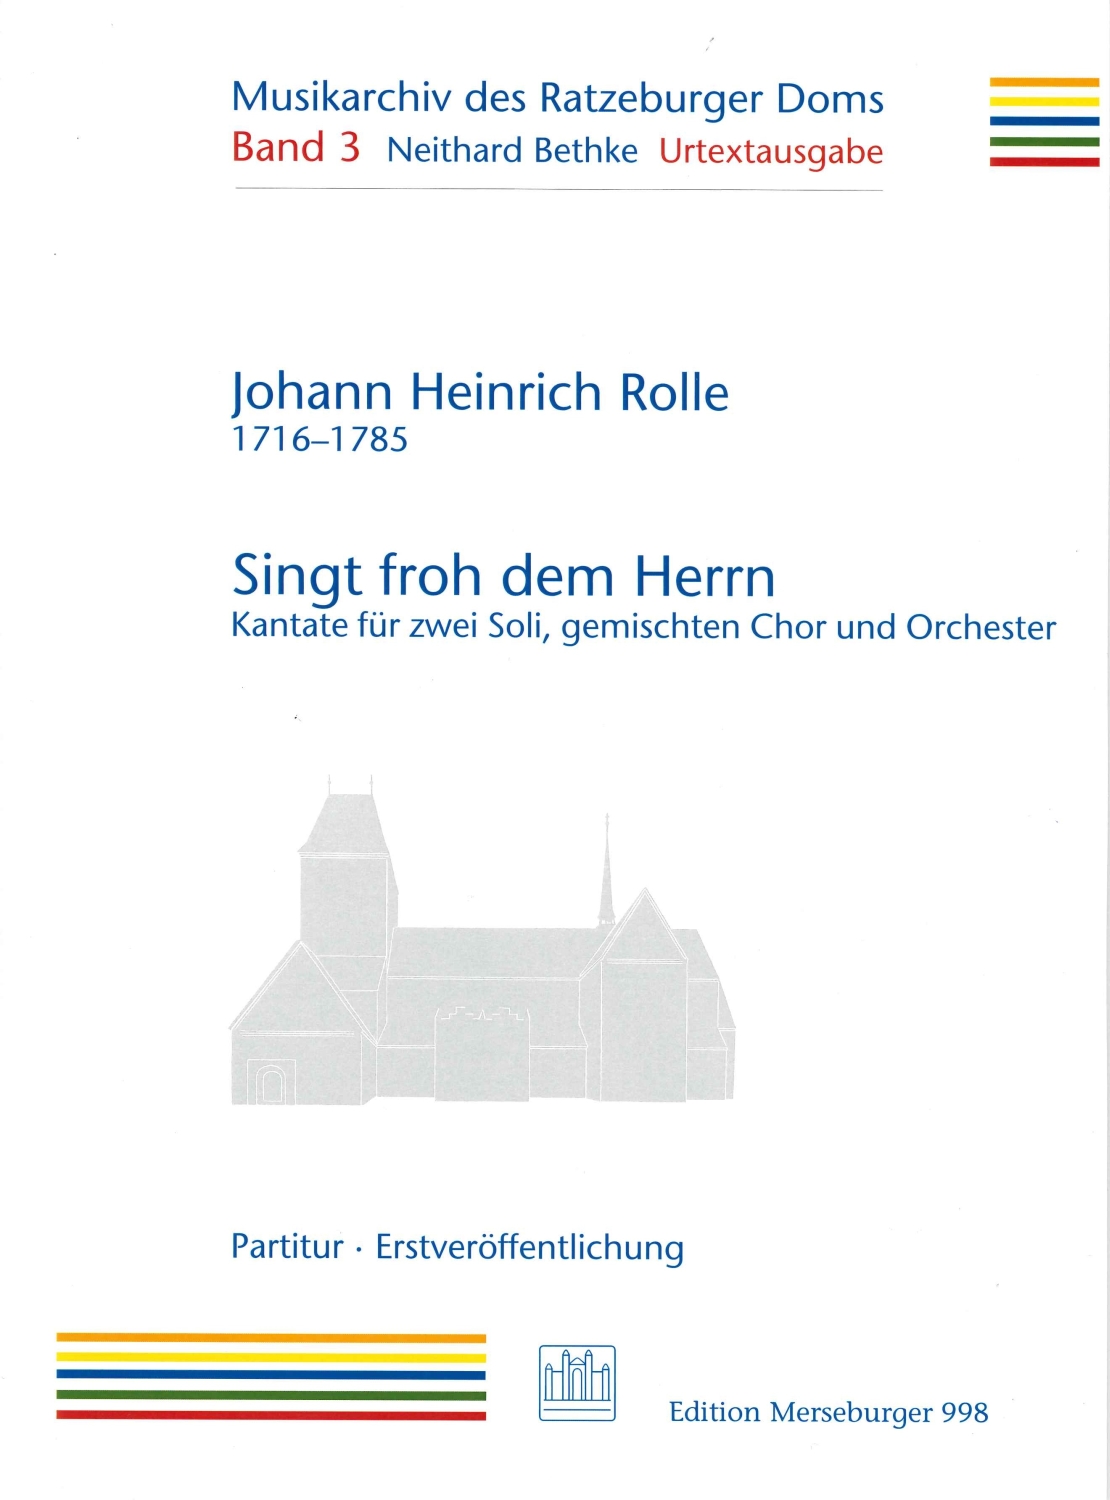 Johann-Heinrich-Rolle-Singt-froh-dem-Herrn-GemCh-O_0001.JPG